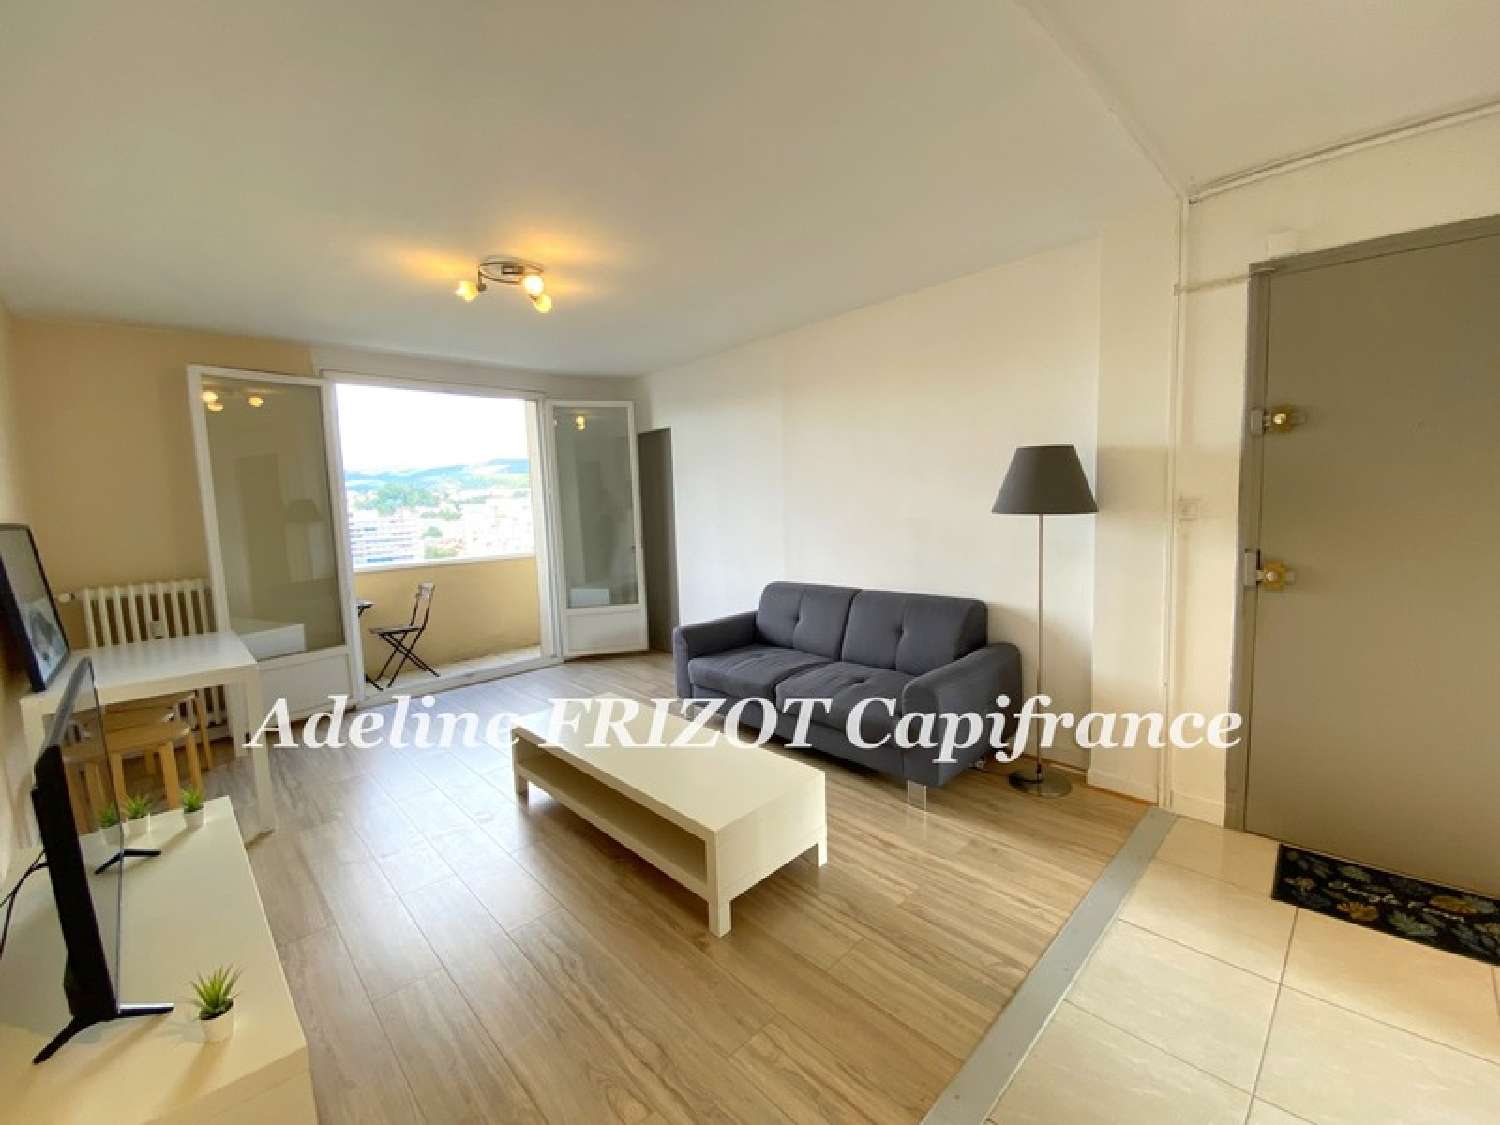  kaufen Wohnung/ Apartment Saint-Étienne Loire 4